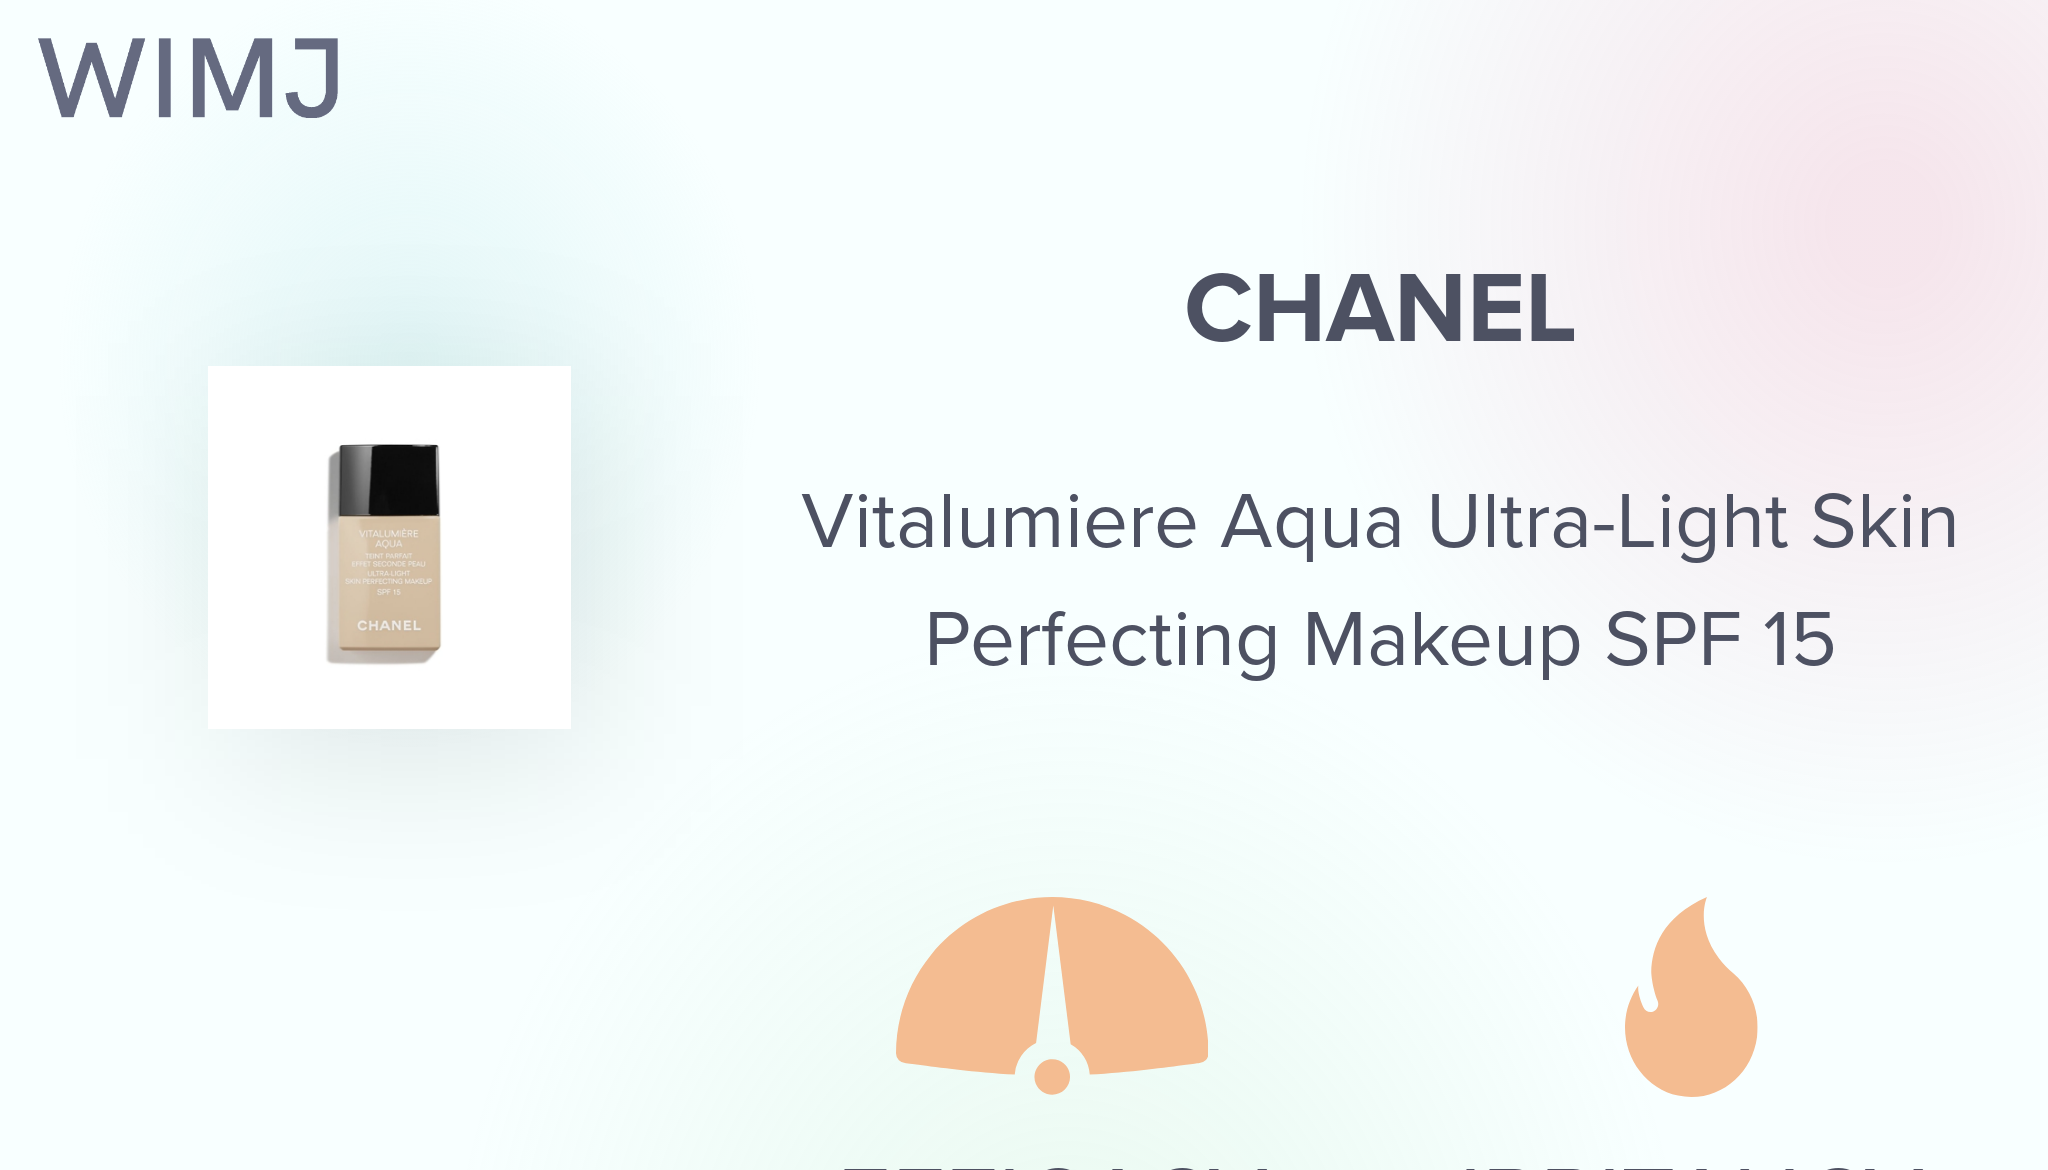 Review: CHANEL - Vitalumiere Aqua Ultra-Light Skin Perfecting